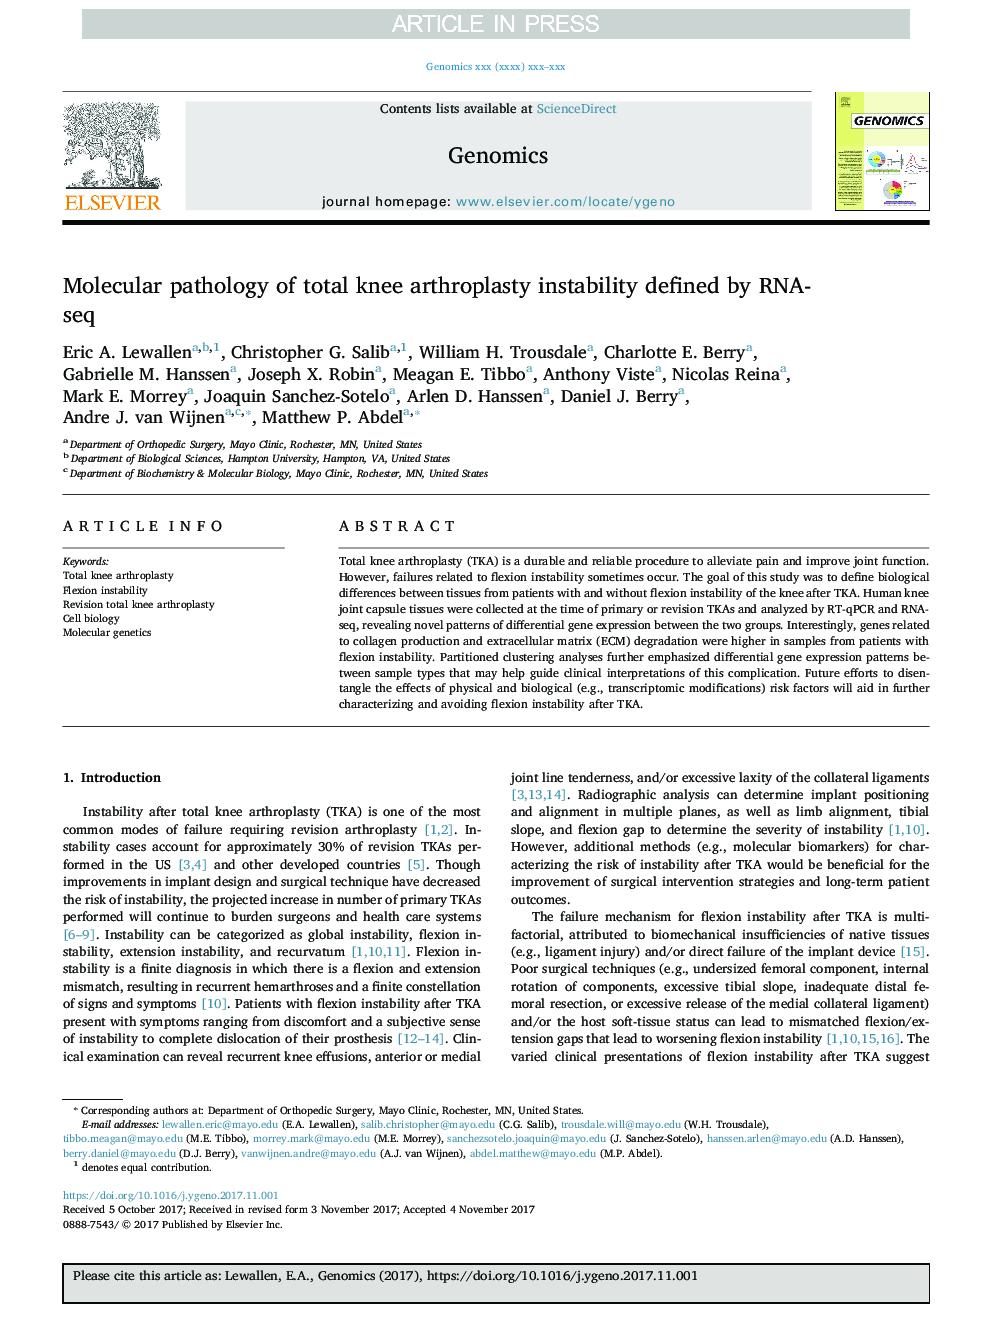 Molecular pathology of total knee arthroplasty instability defined by RNA-seq